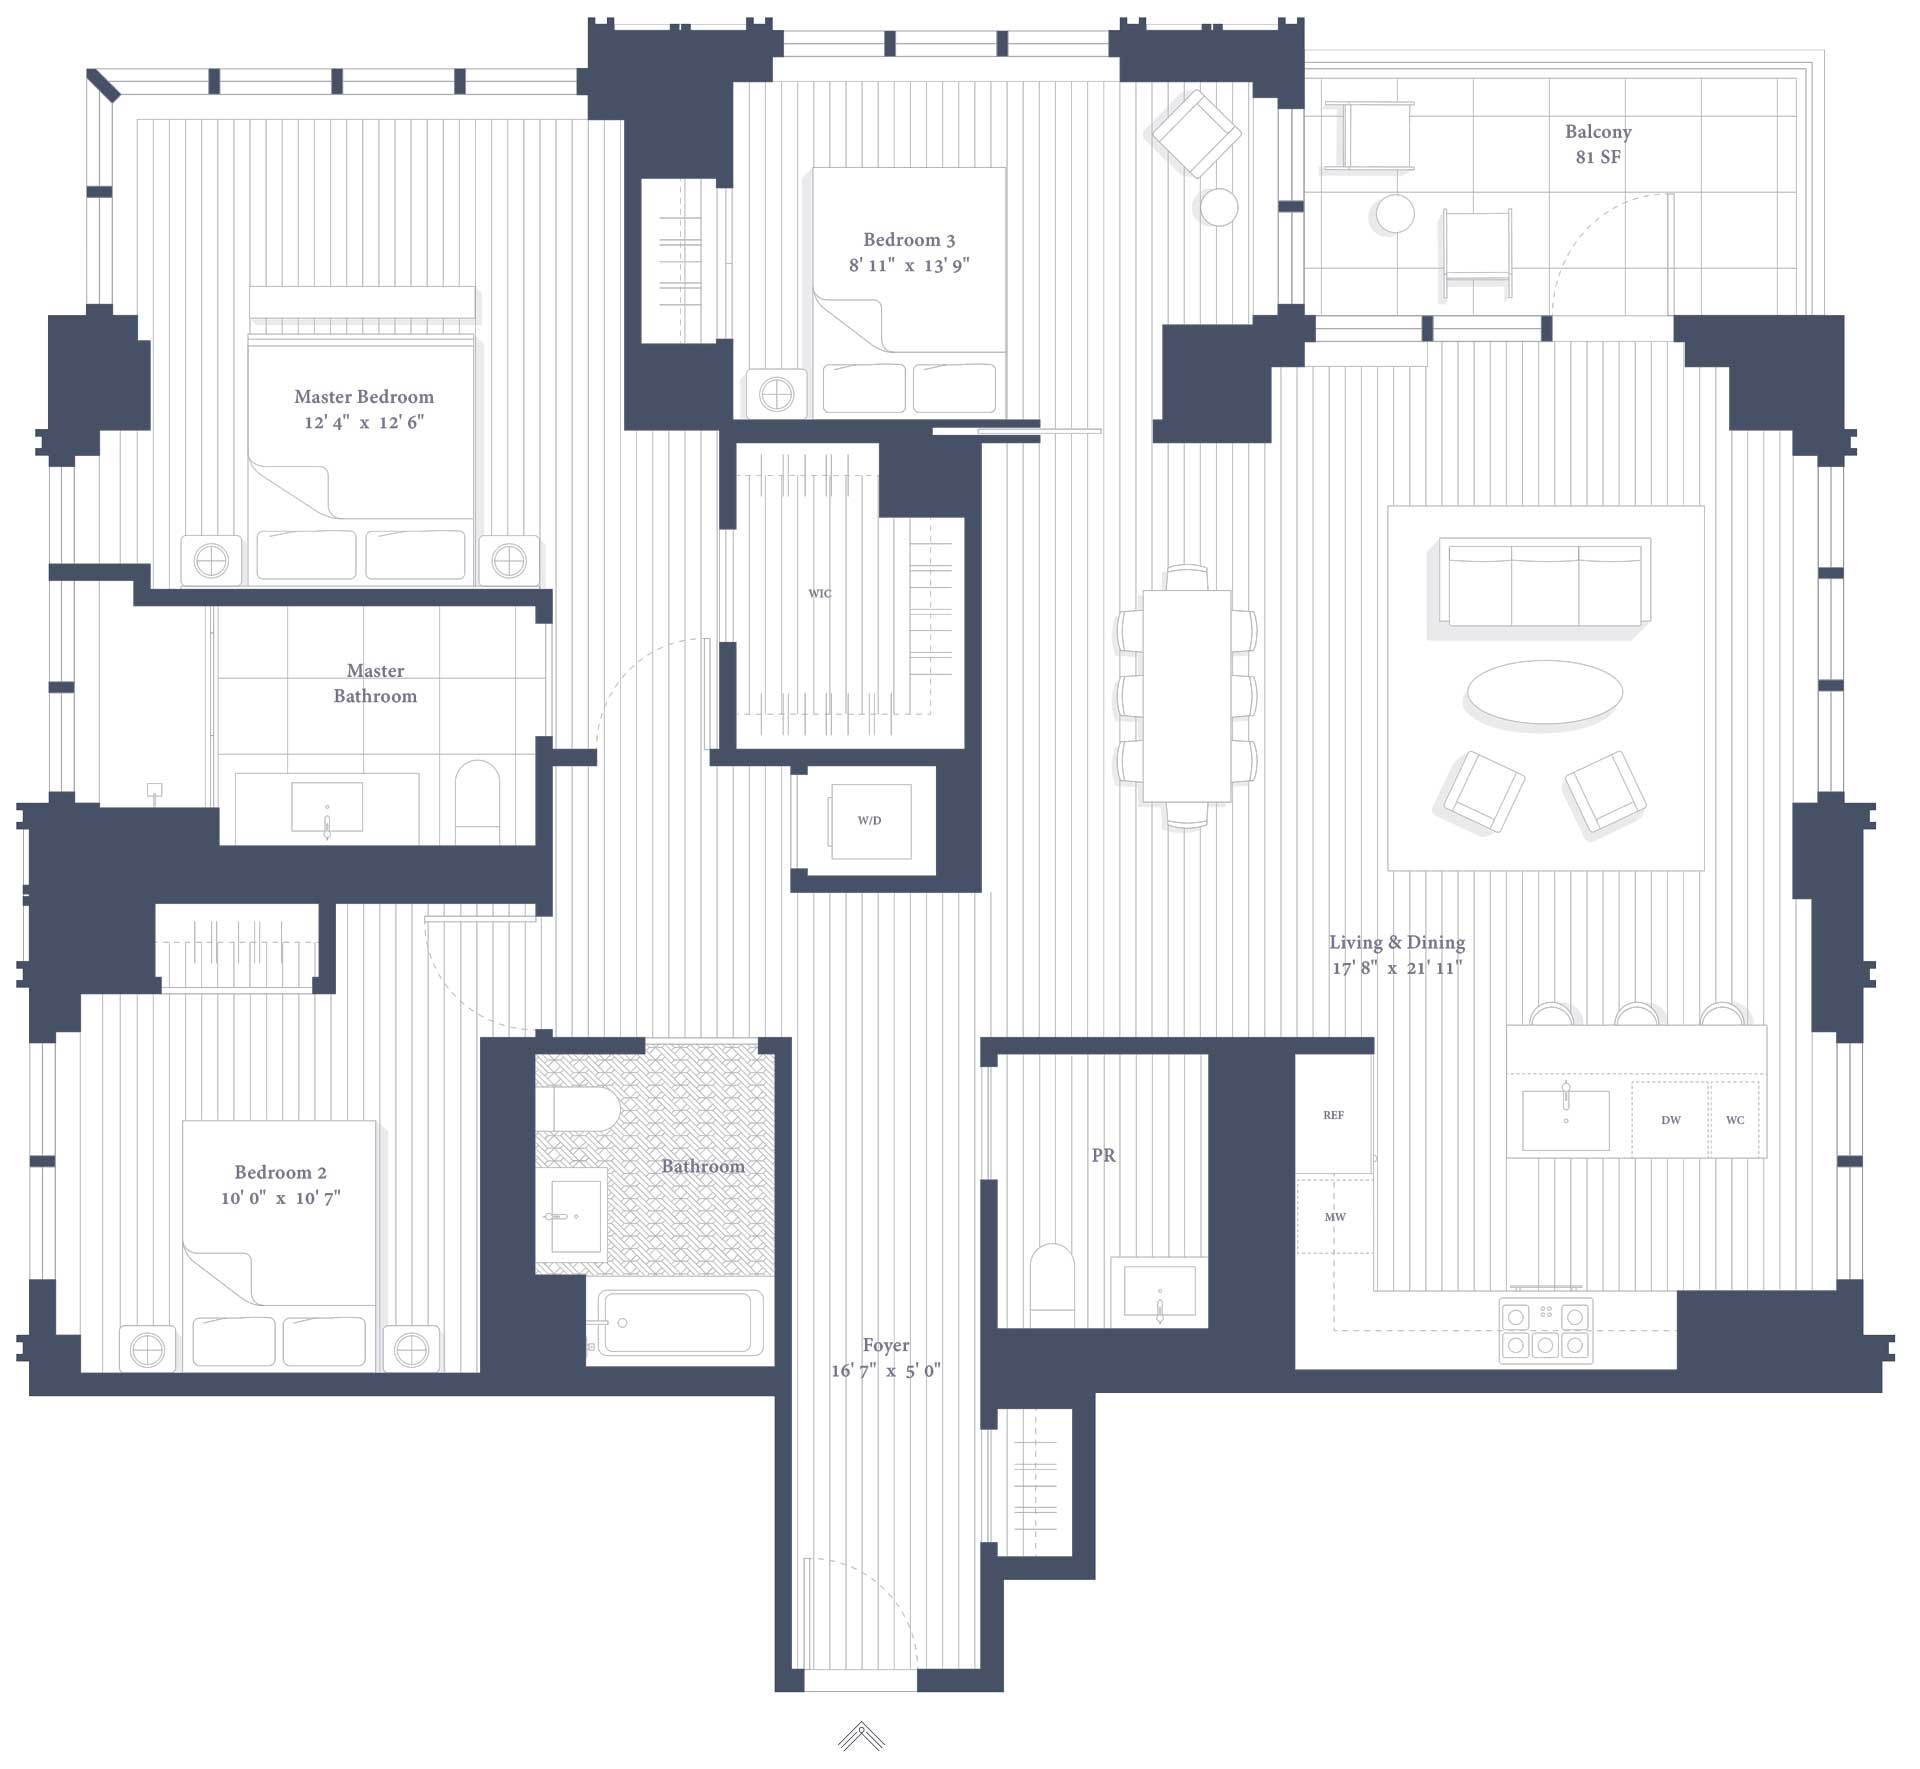 38A Floor Plan